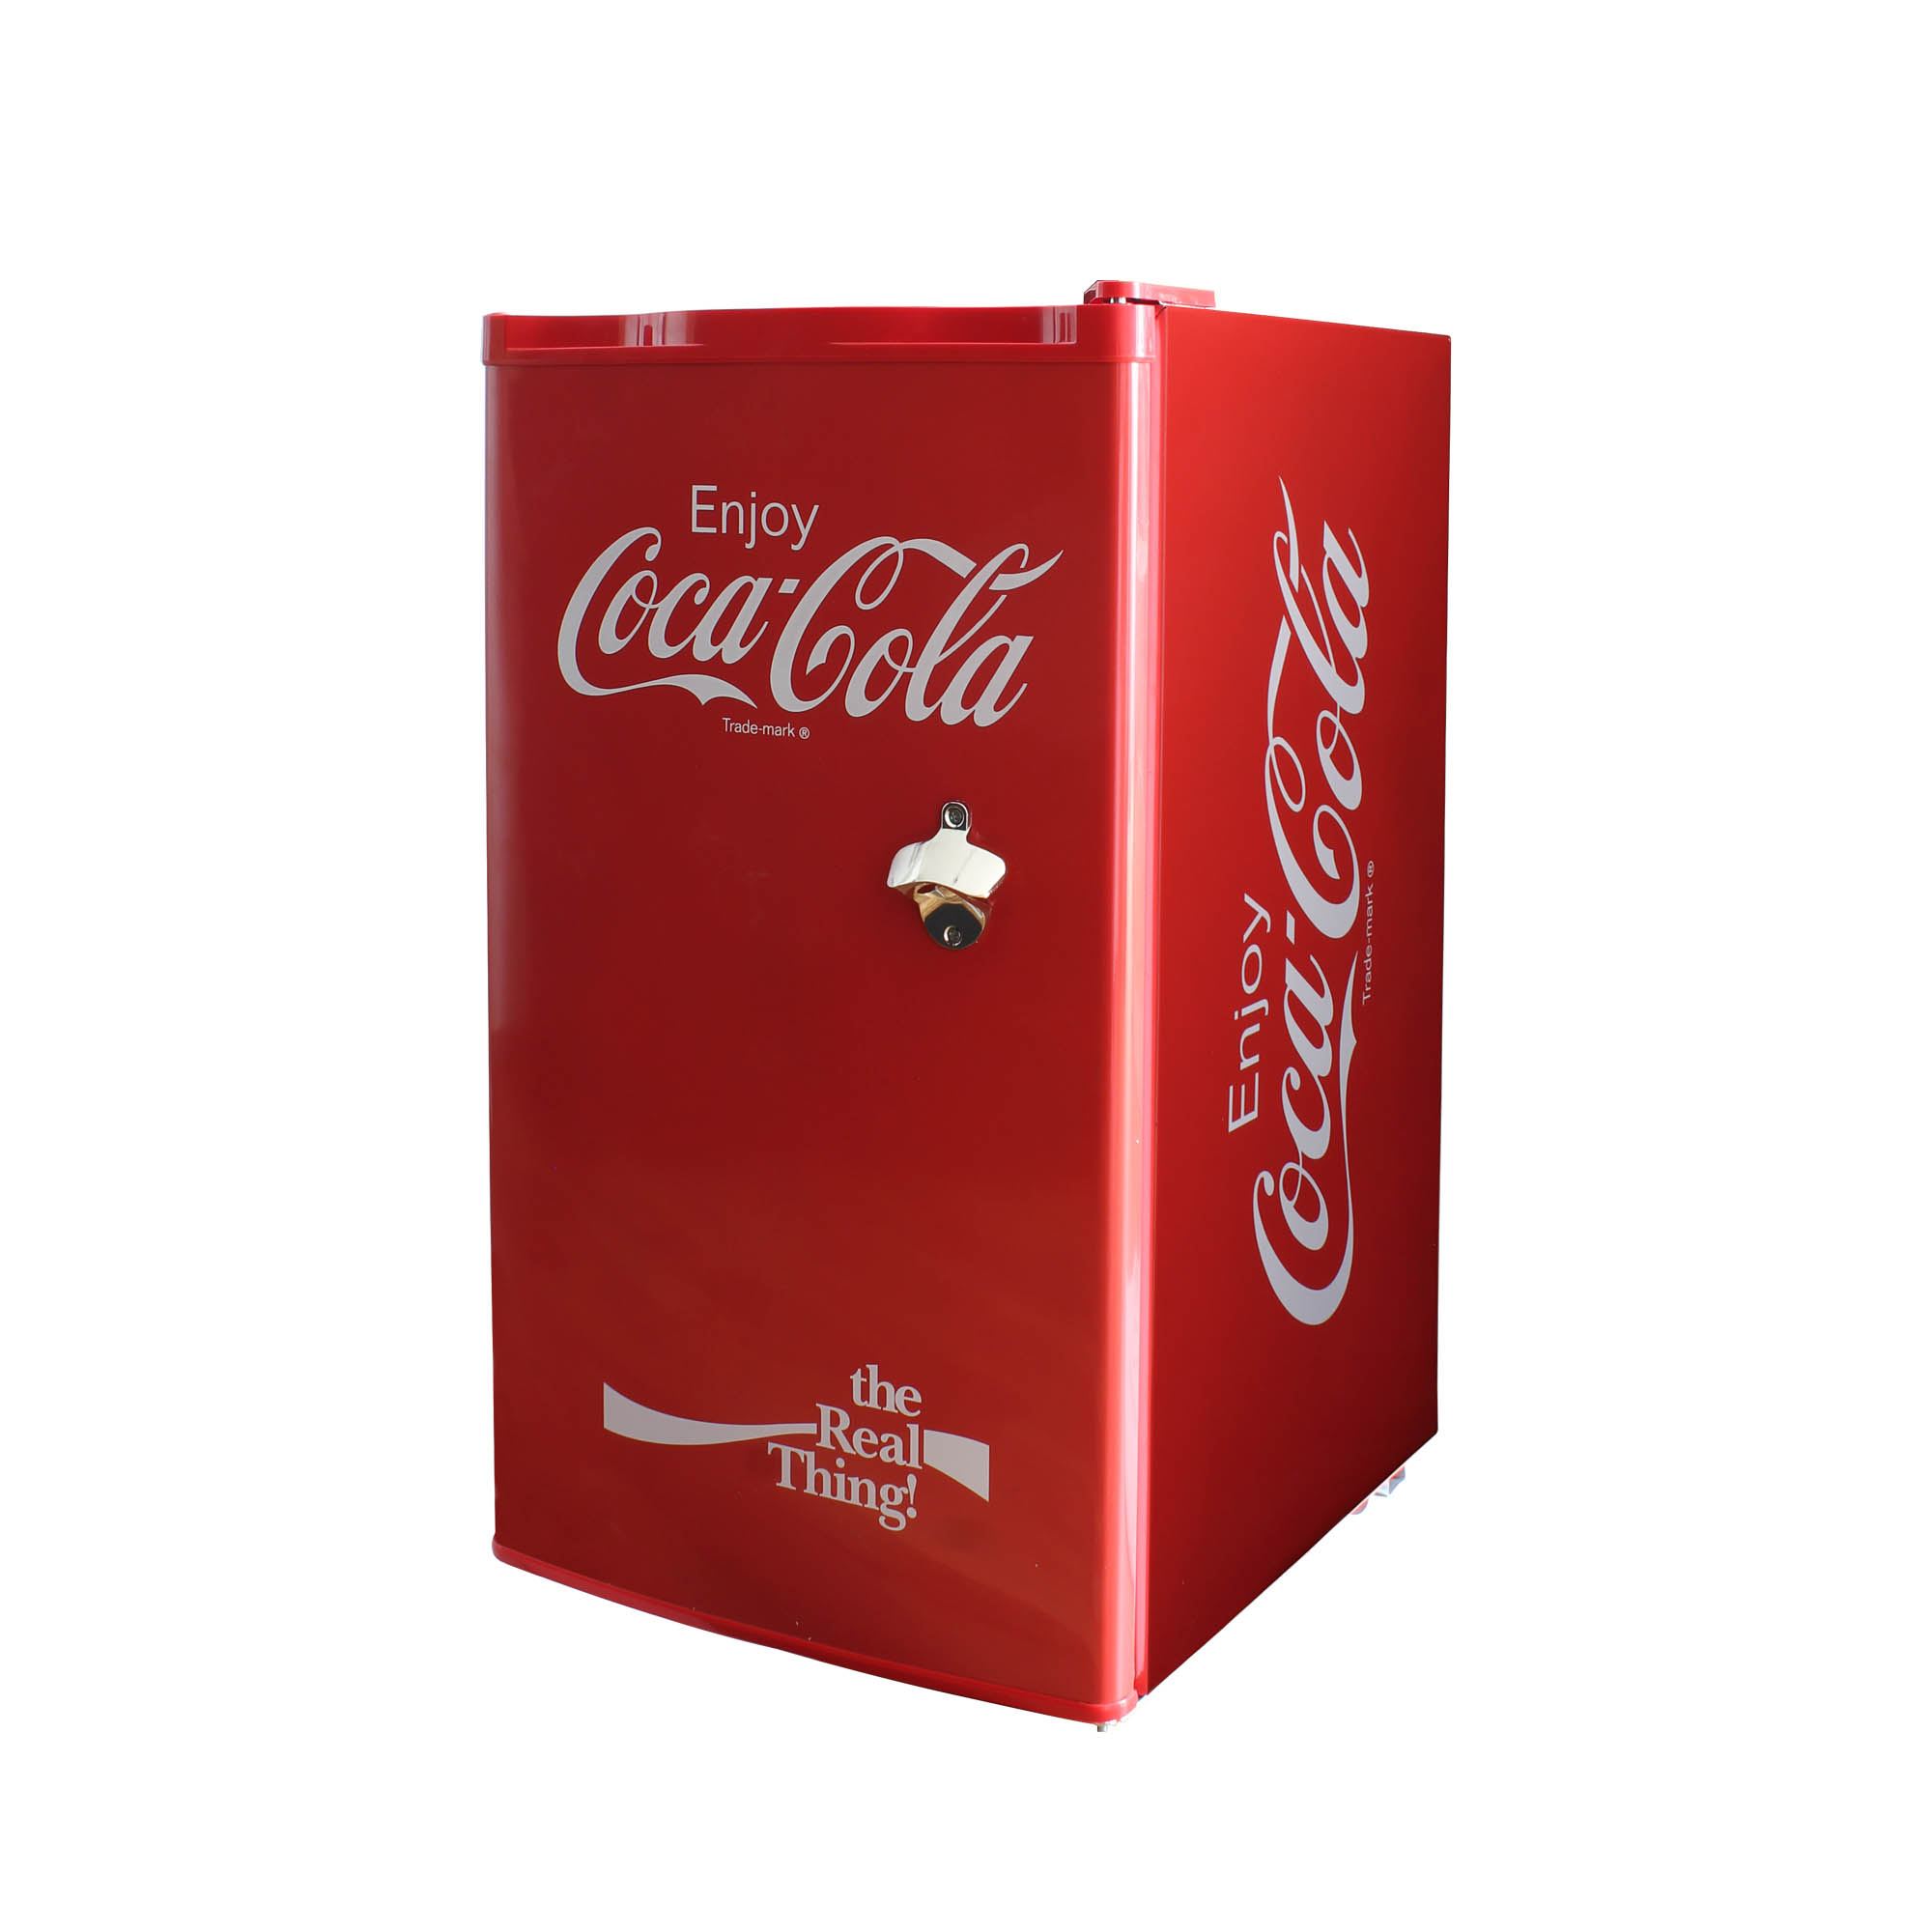 Frigobar Dace Coca cola 3.2p3 Enjoy